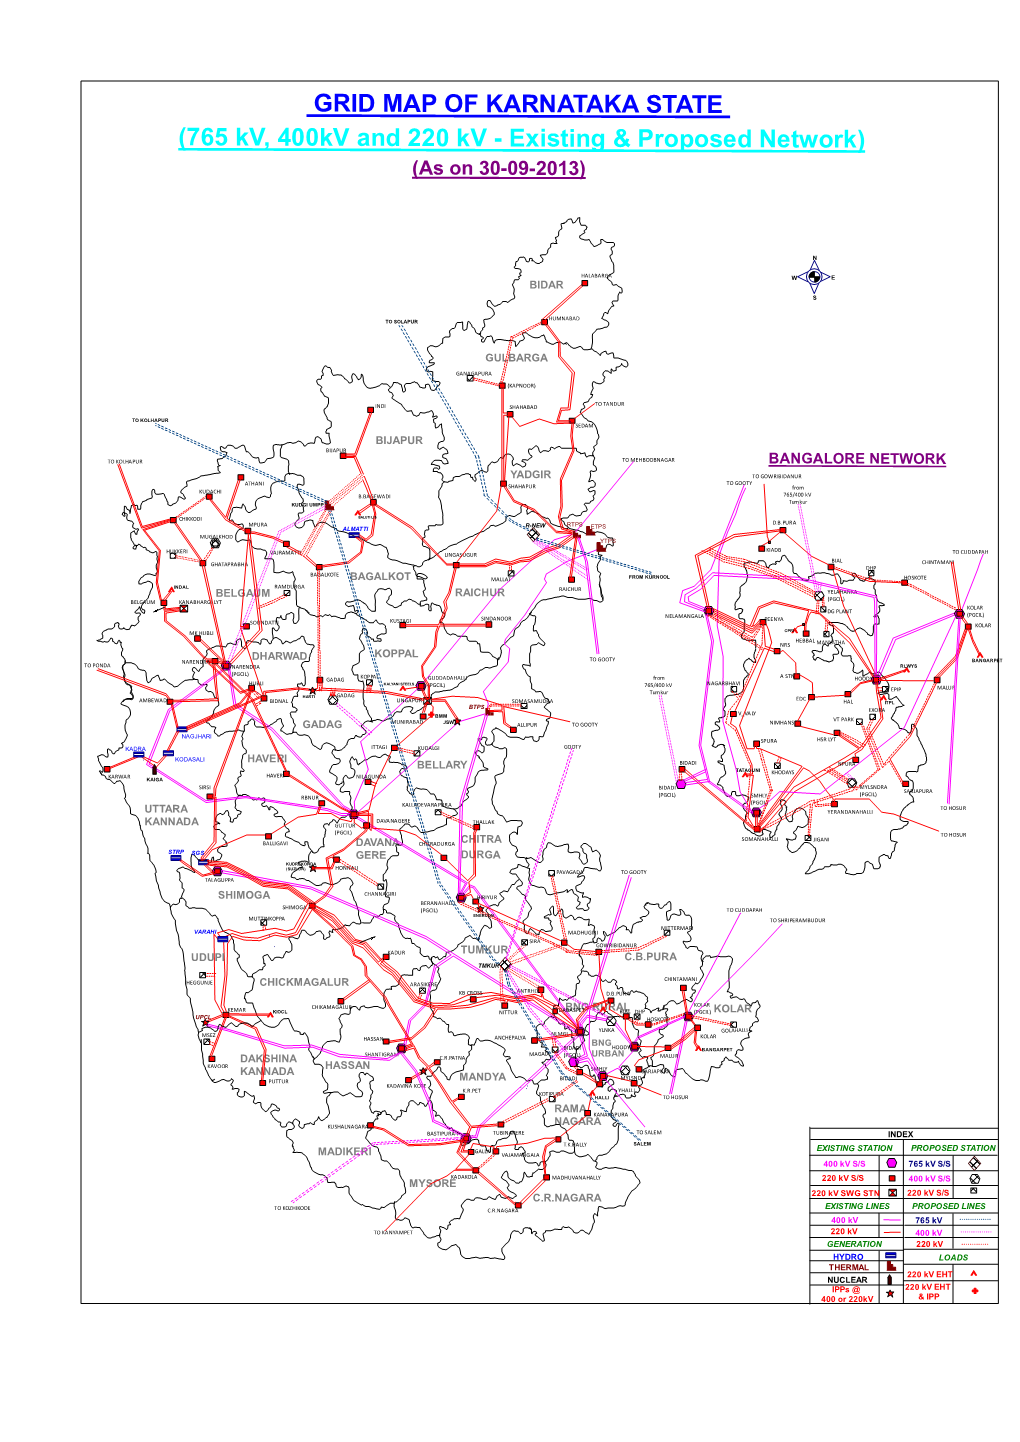 GRID MAP of KARNATAKA STATE (765 Kv, 400Kv and 220 Kv - Existing & Proposed Network) (As on 30-09-2013)